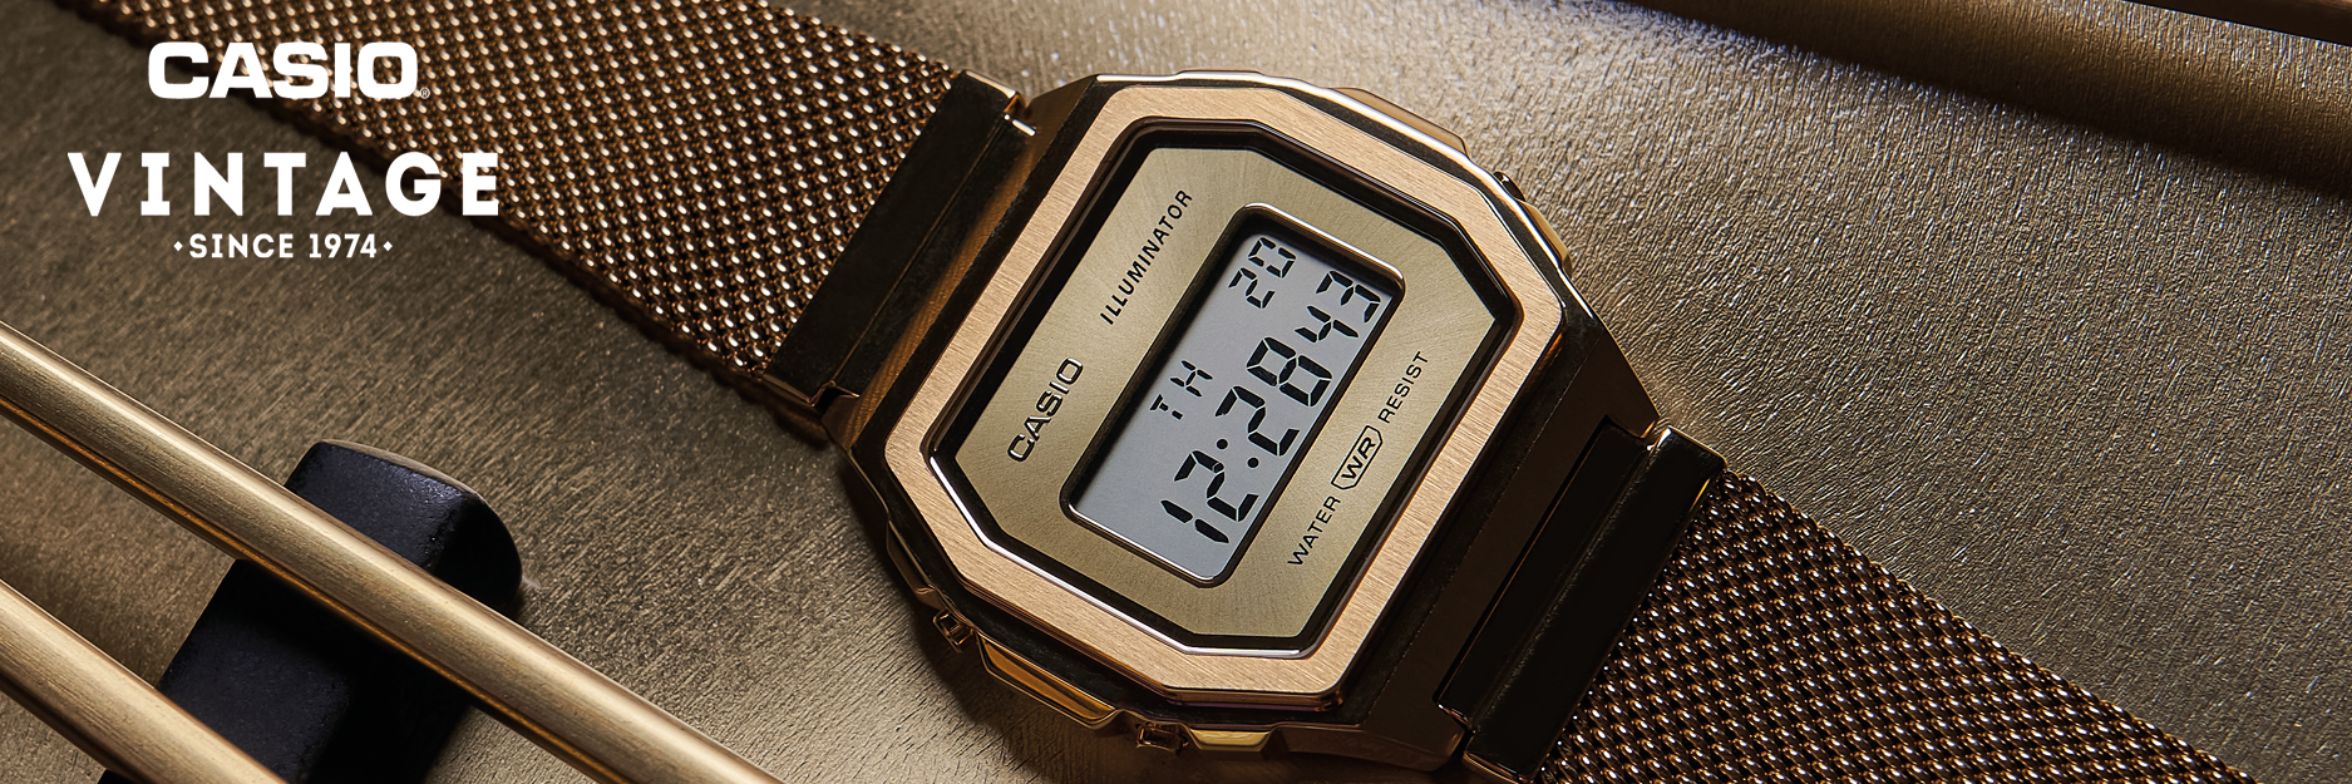 Casio Classic-watches